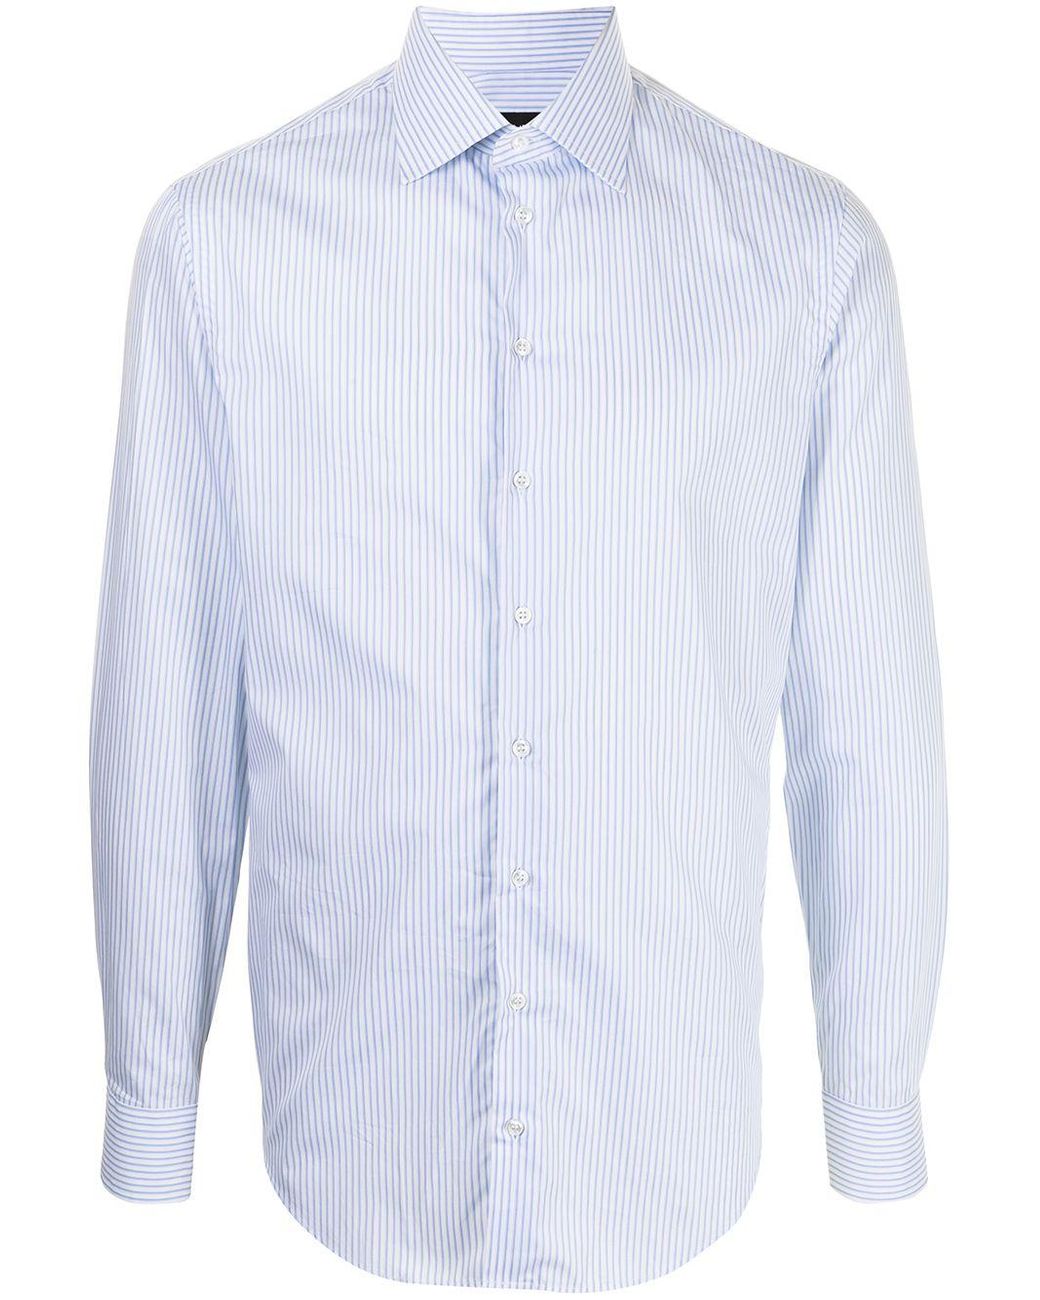 Giorgio Armani Stripe Print Cotton Shirt for Men - Lyst